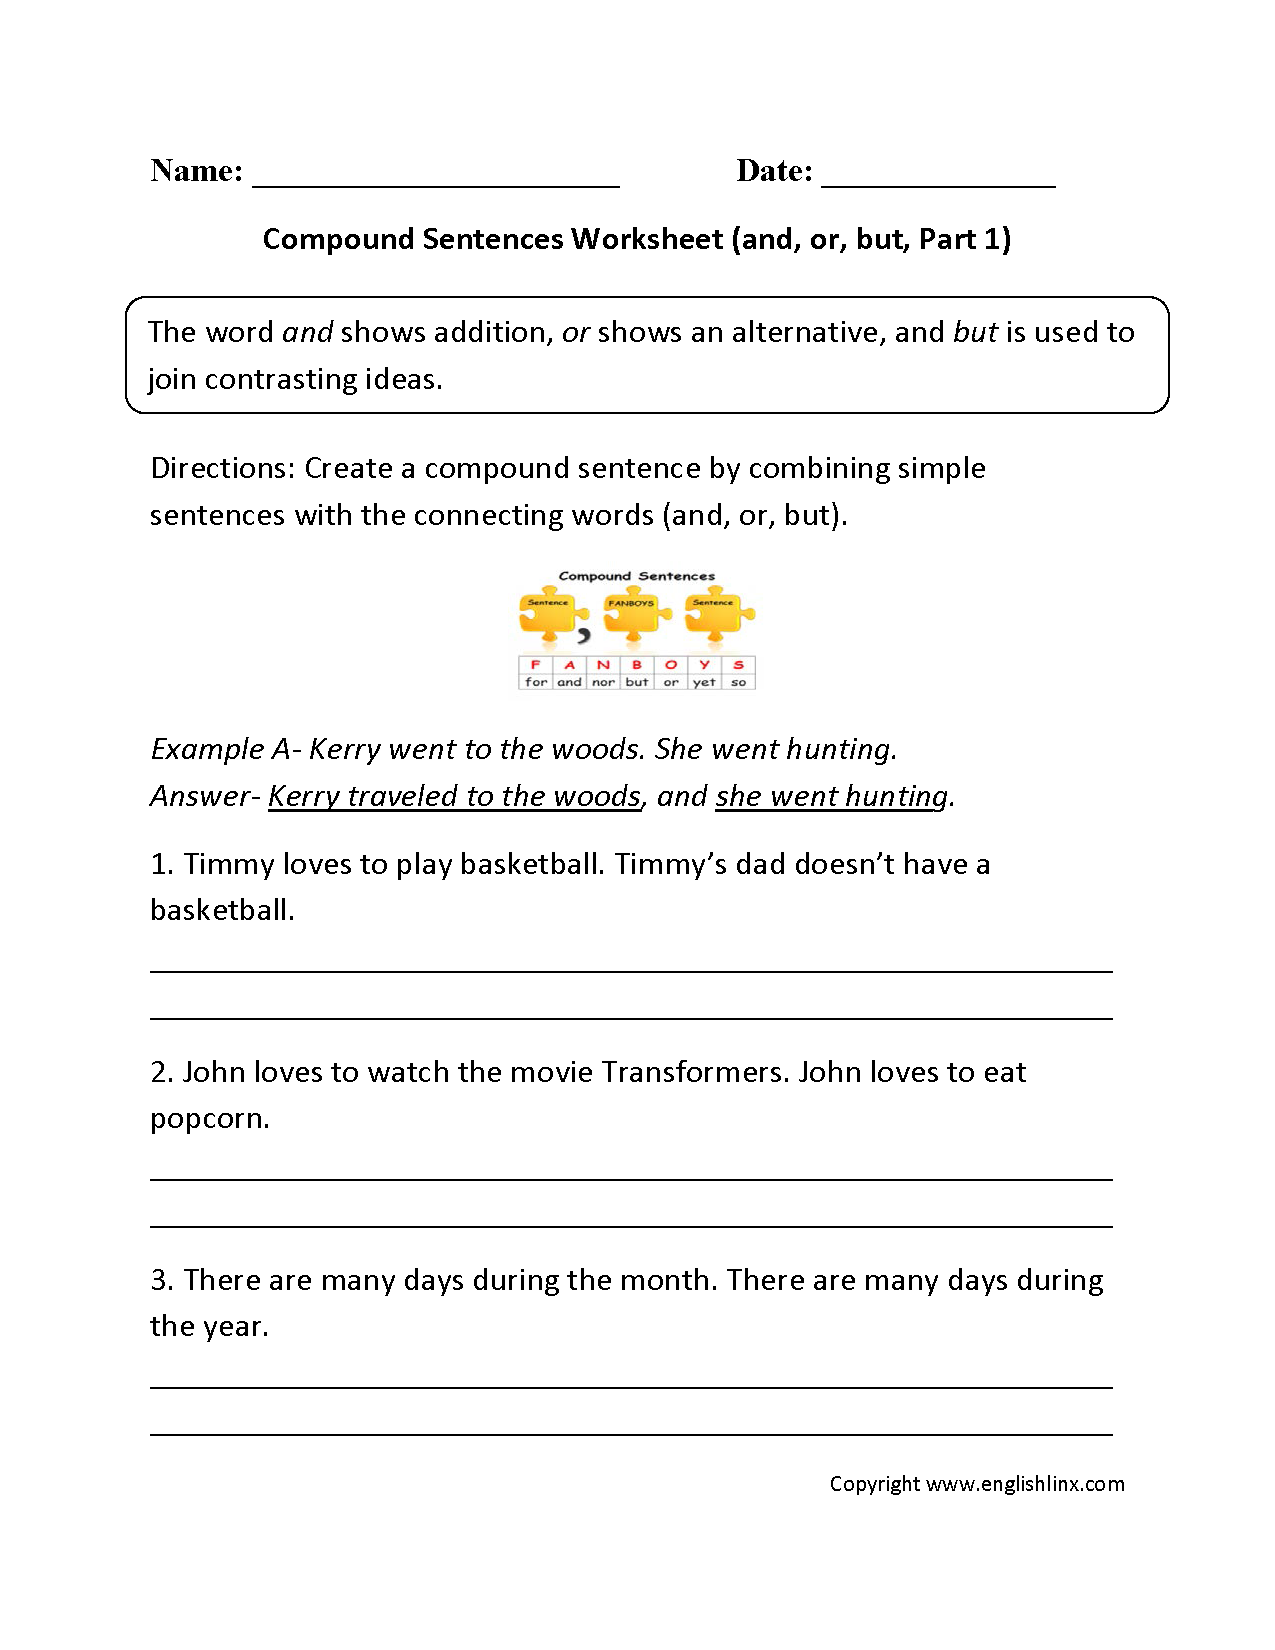 Compound Sentences Worksheet Doc